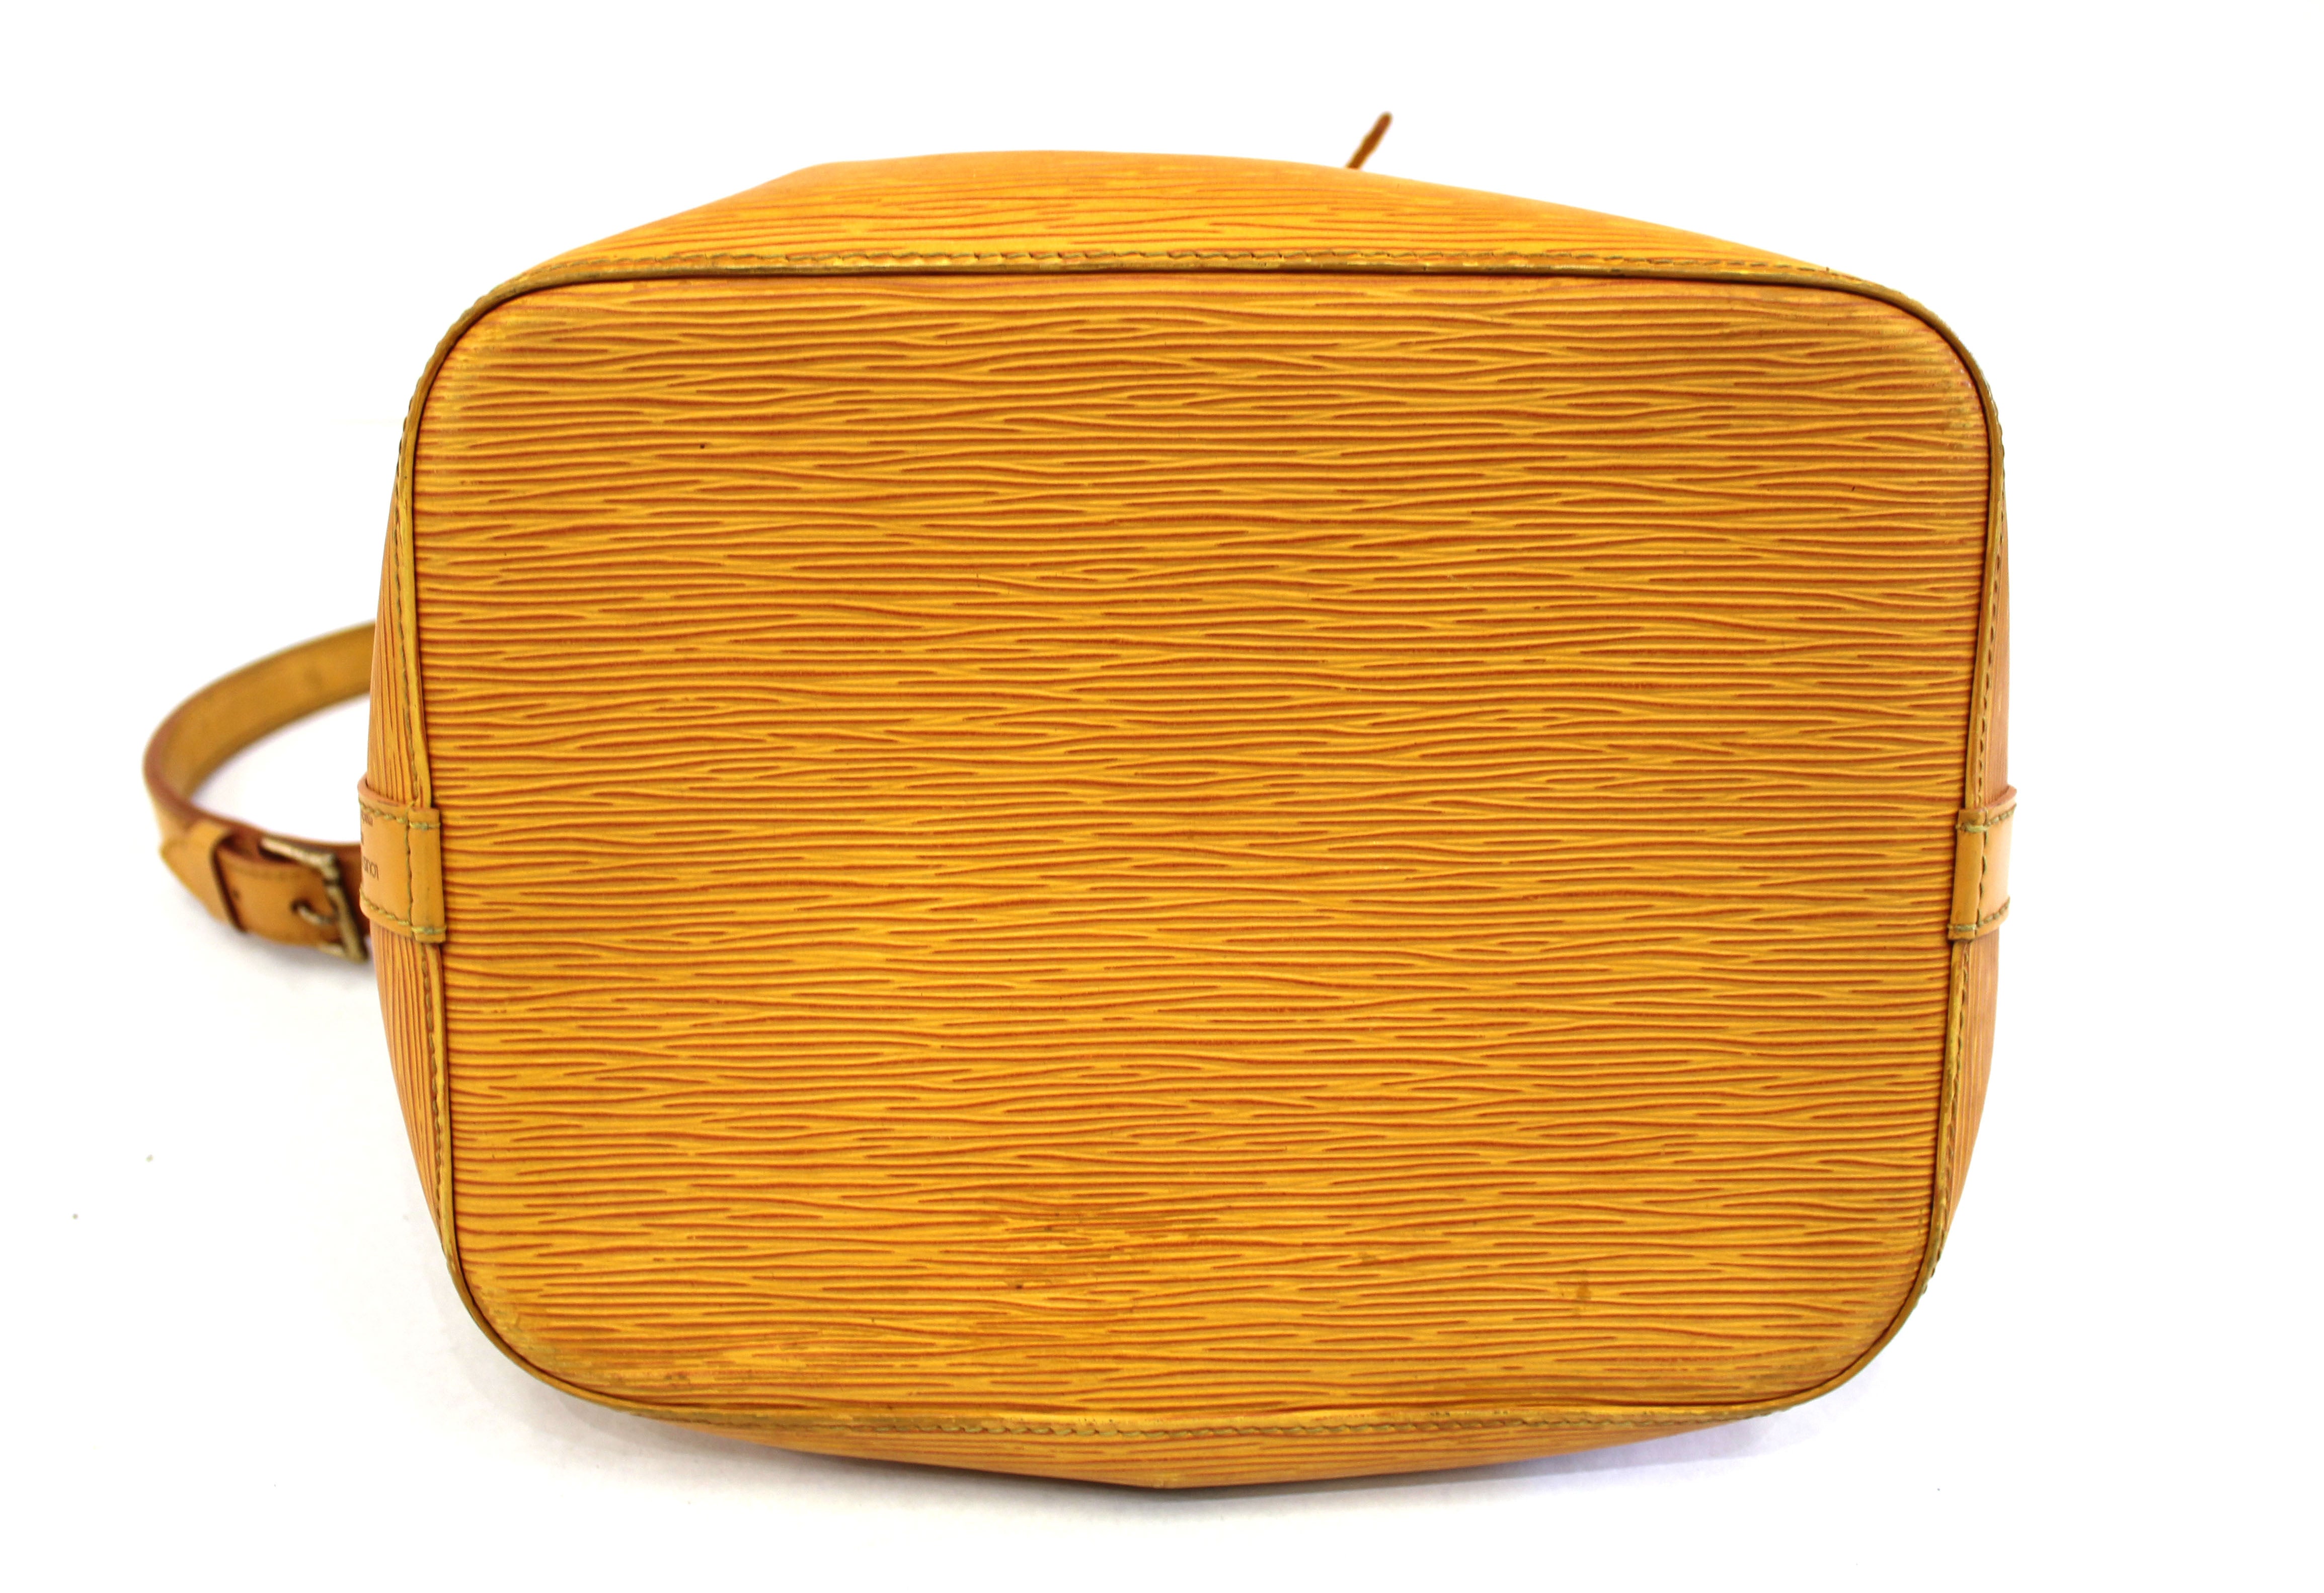 Authentic Louis Vuitton Epi yellow leather Petit Noe bag